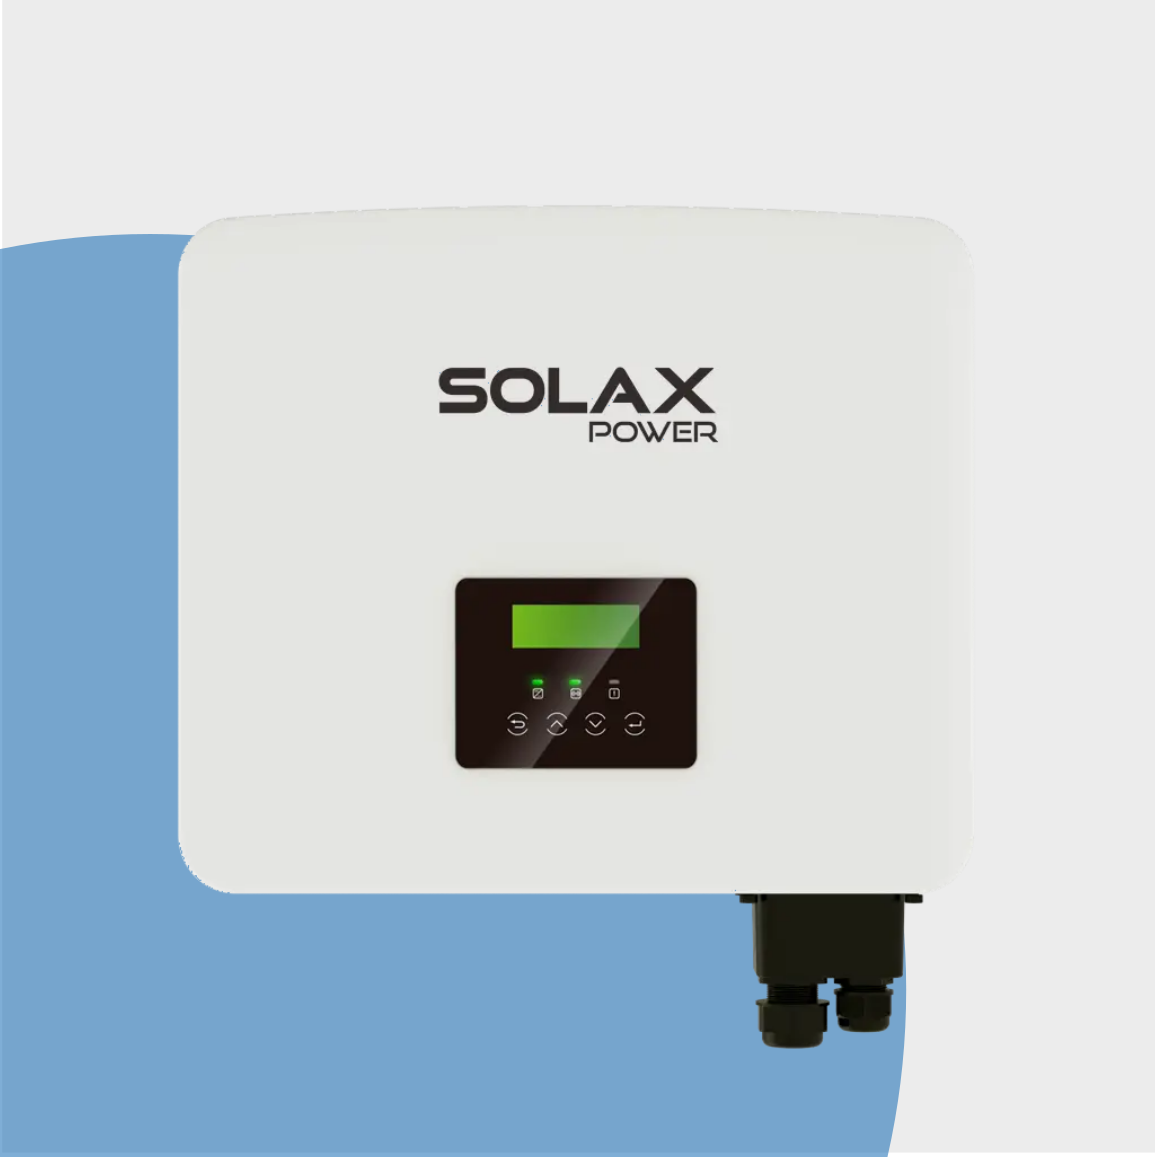 Solax 7.5kw single phase inverter - Oliross Solar